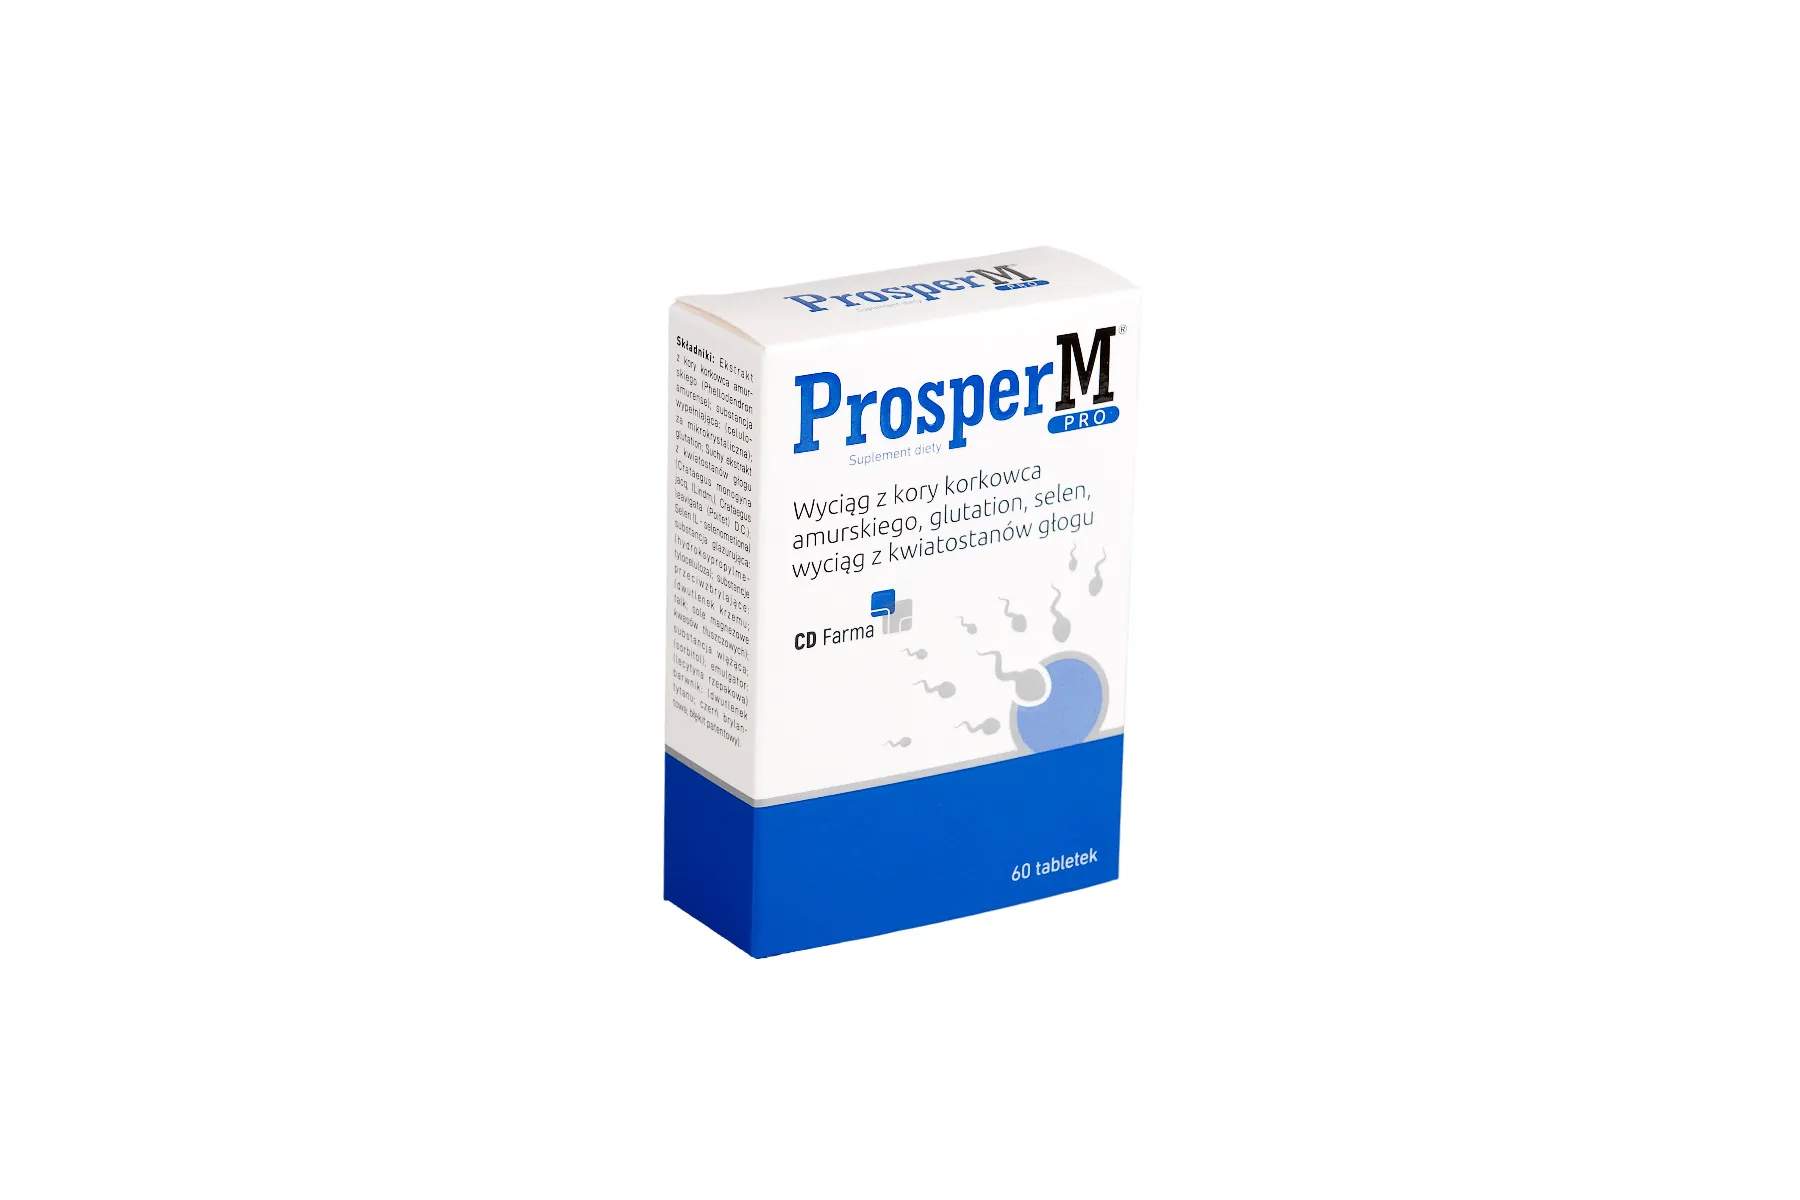 ProsperM Pro, suplement diety, 60 tabletek